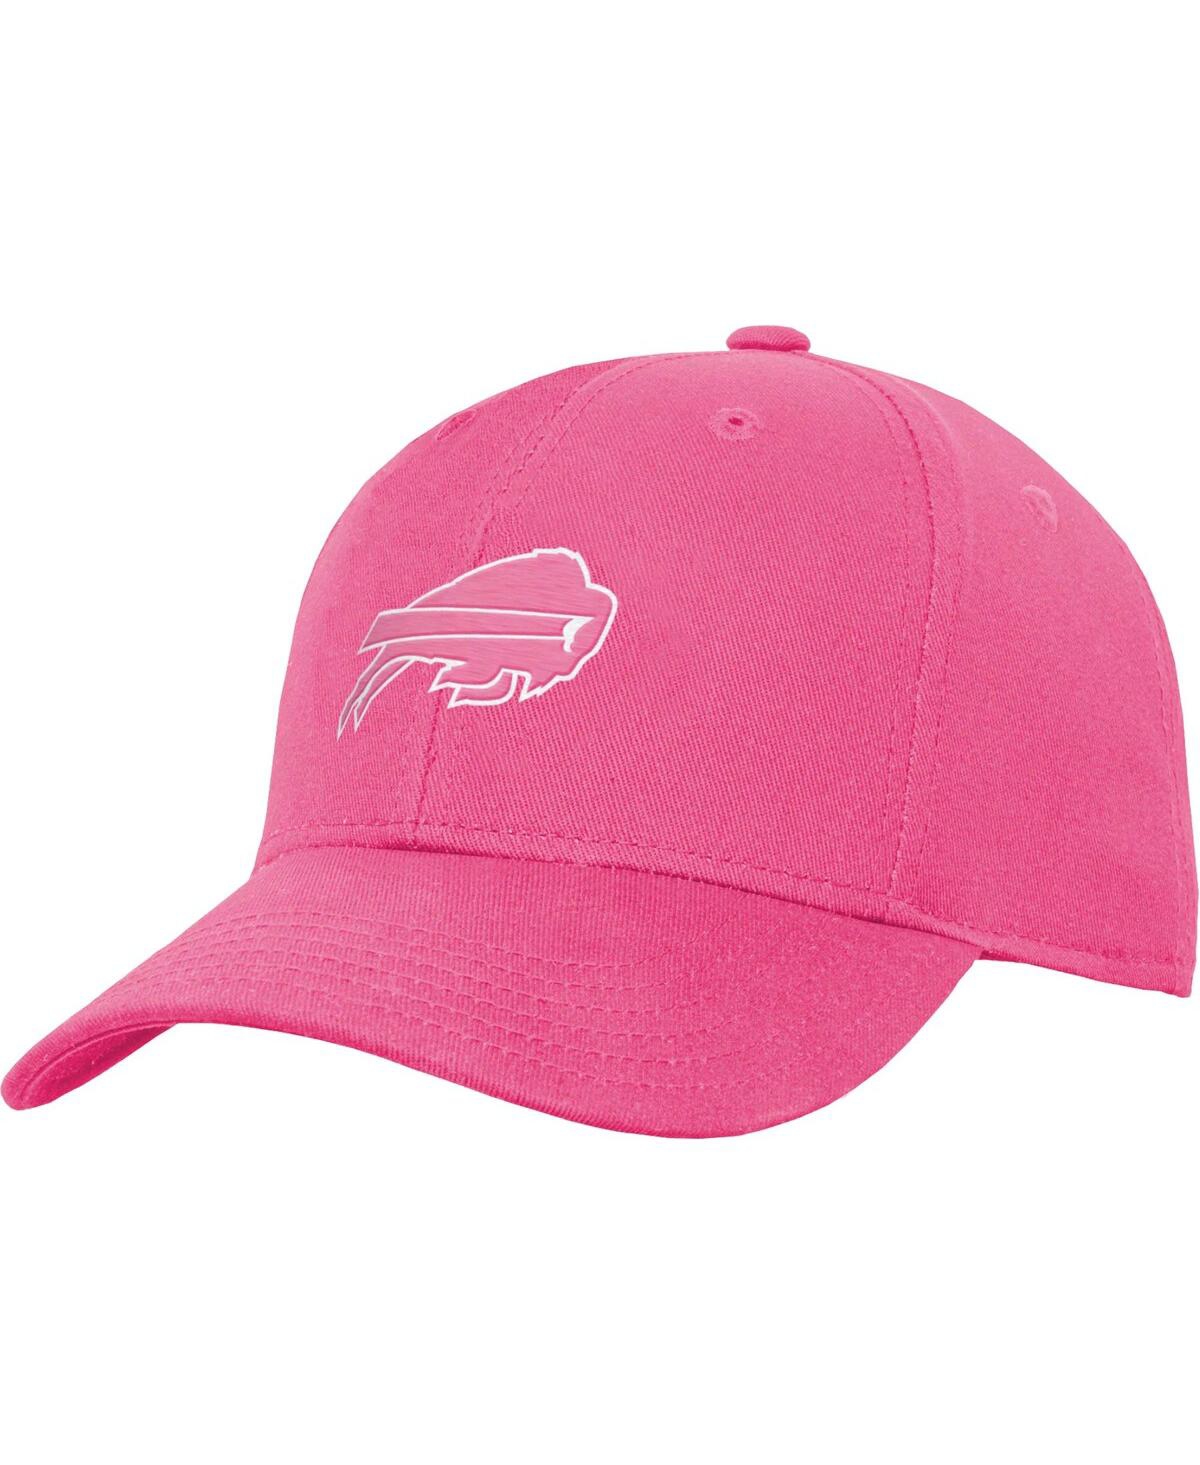 Shop Outerstuff Big Girls Pink Buffalo Bills Adjustable Hat